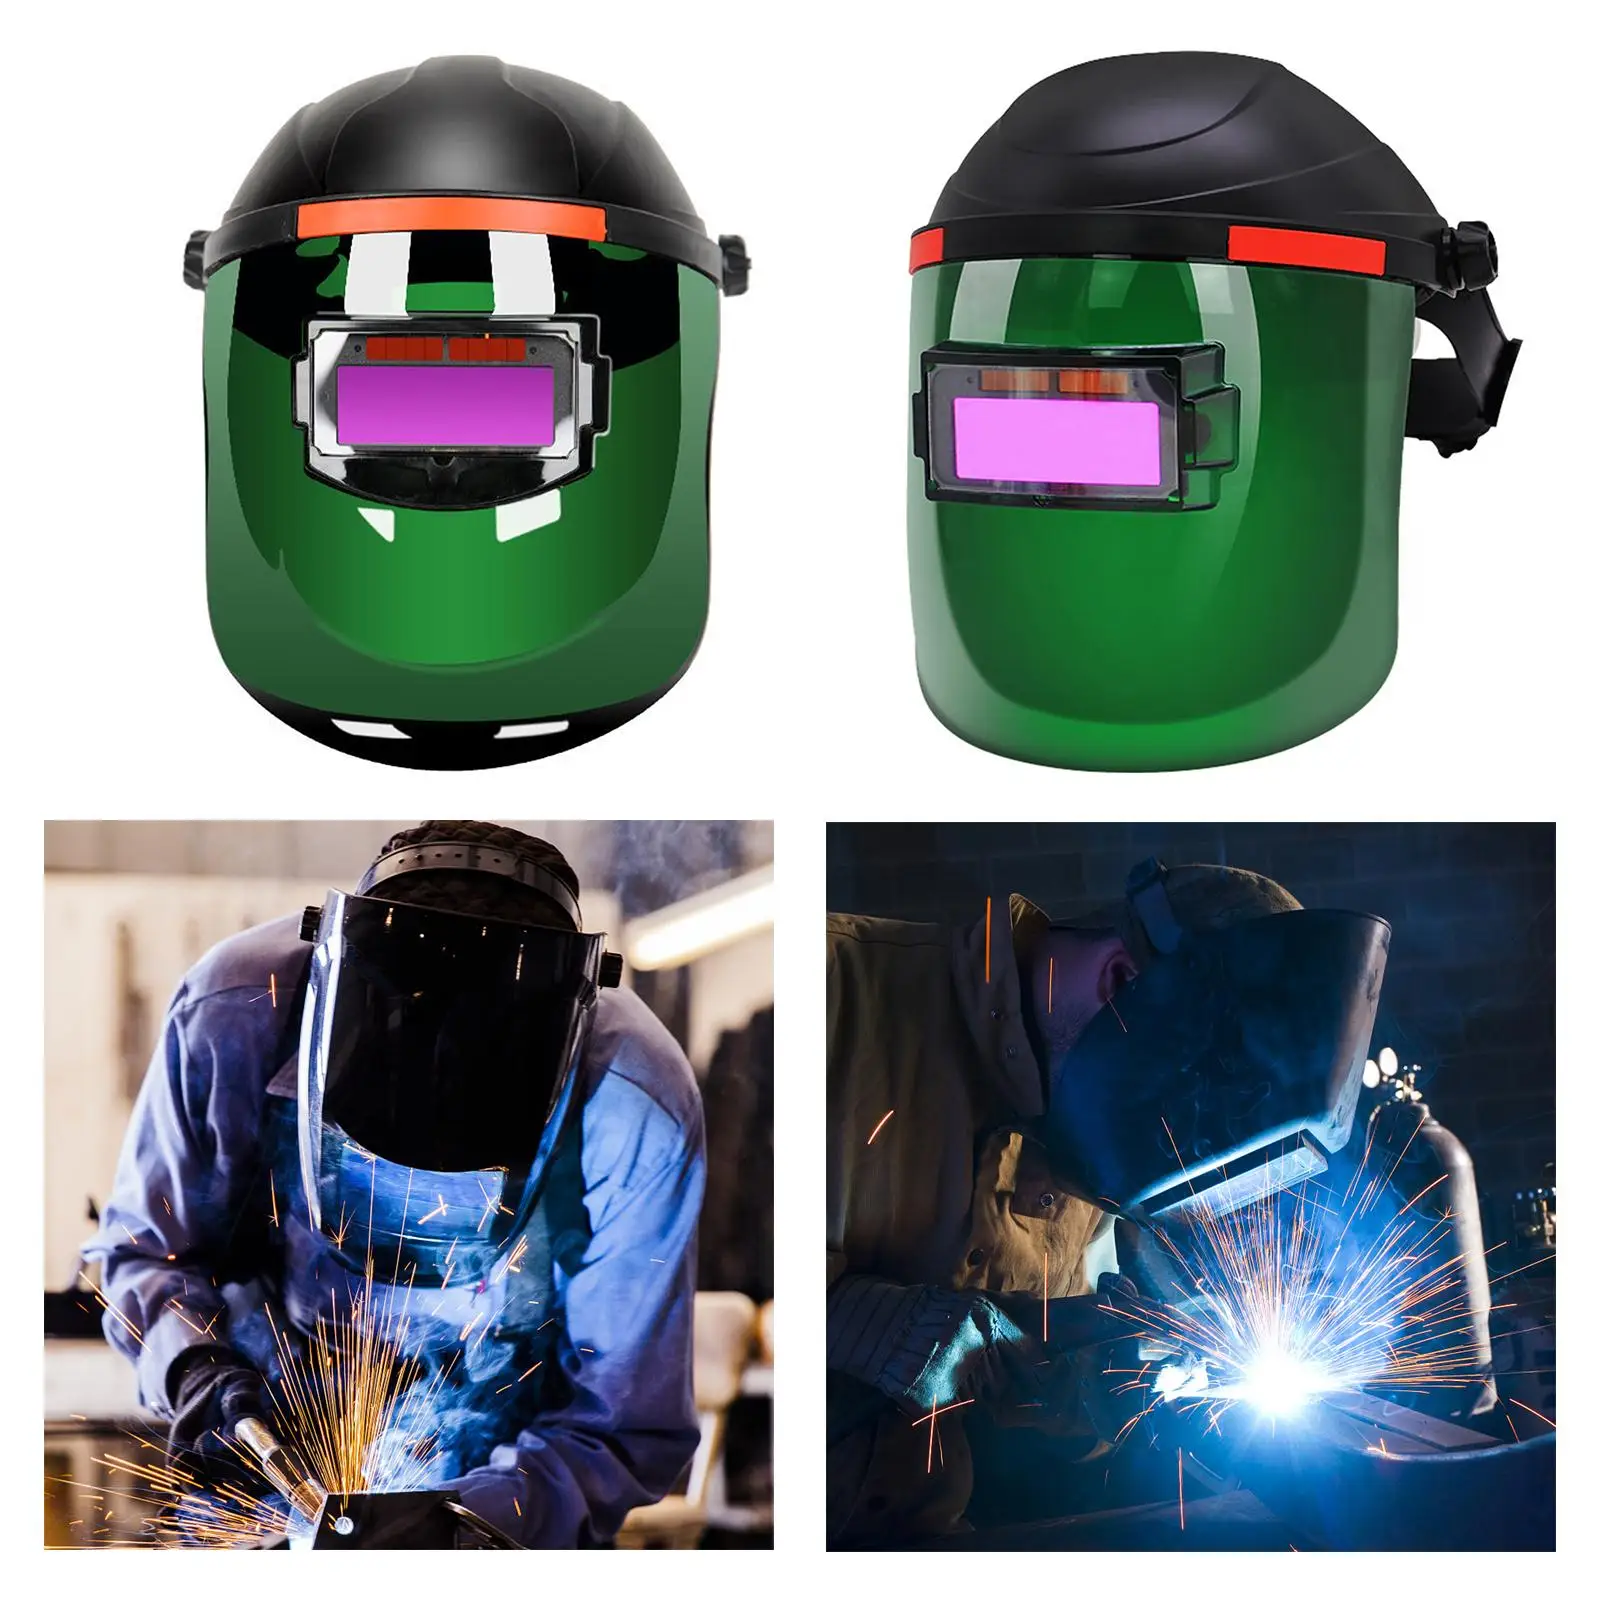 Solar Powered Auto Darkening Welding Helmet Safety Protective Eye Shield Welding Mask Helmet for TIG Mig ARC Range 9-13